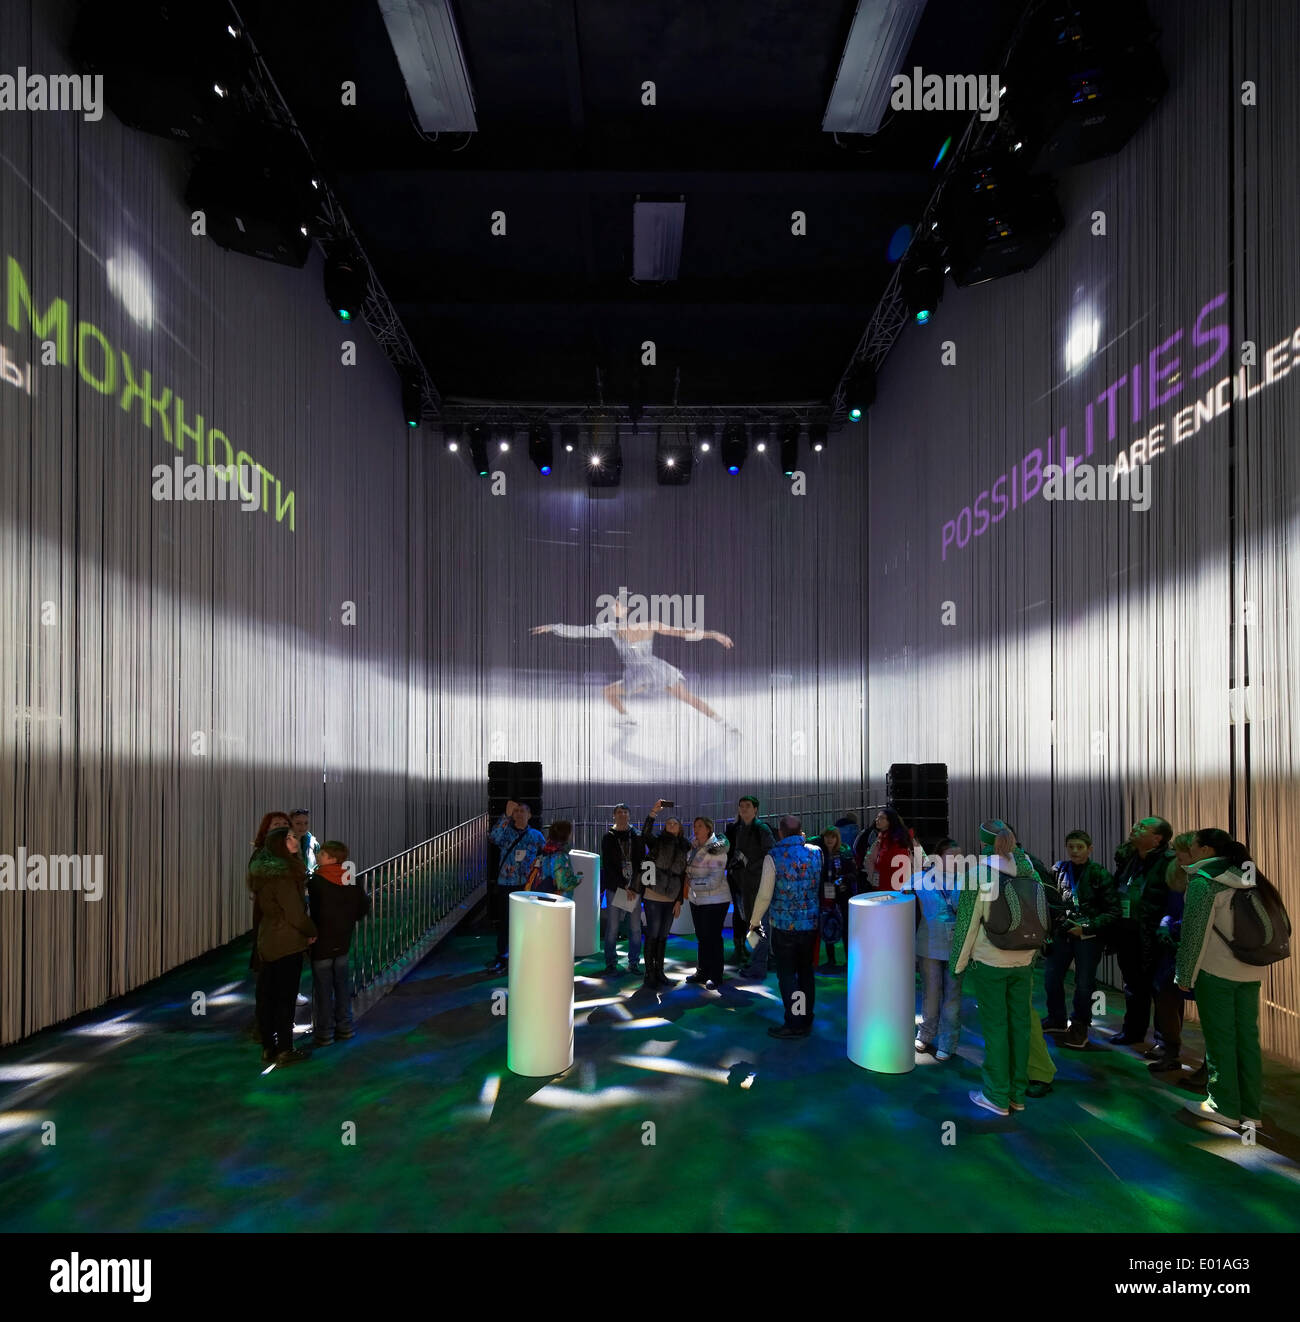 MegaFon, Sochi Winter Olympics 2014, Sochi, Russia. Architect: Asif Khan, 2014. Exhibition hall interior with projection. Stock Photo